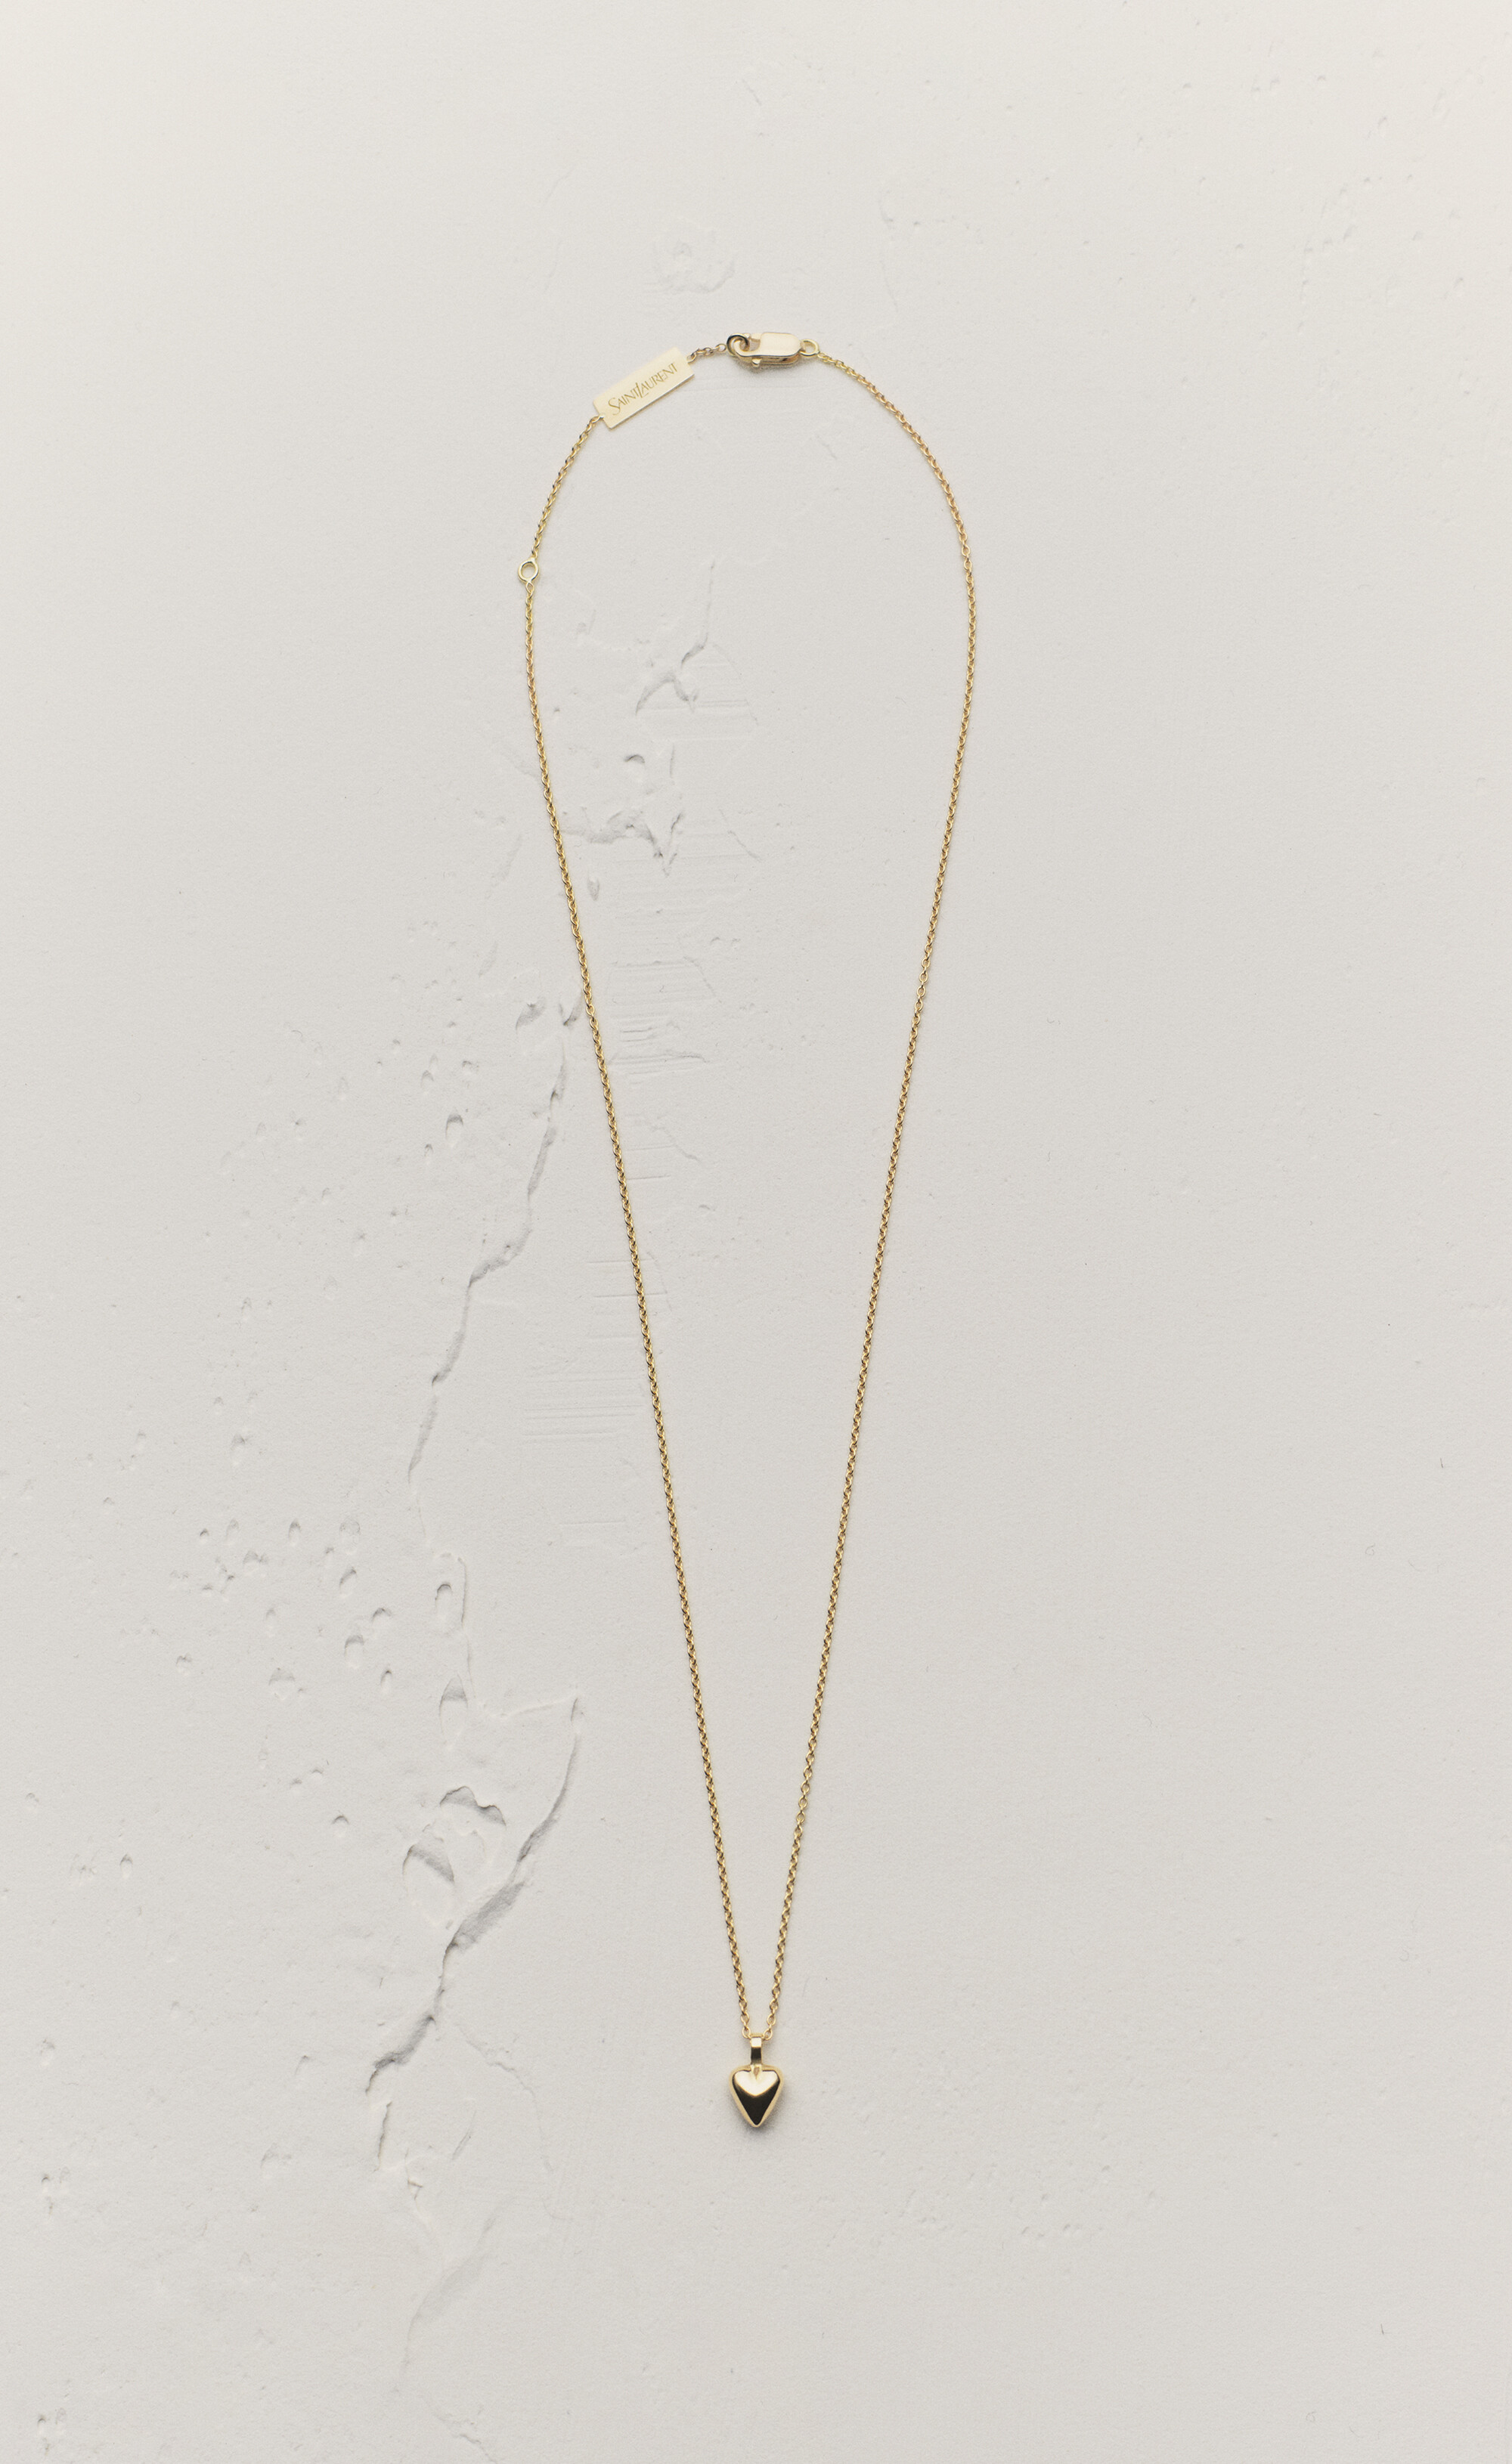 Heart pendant necklace in 18K yellow gold | Saint Laurent | YSL.com